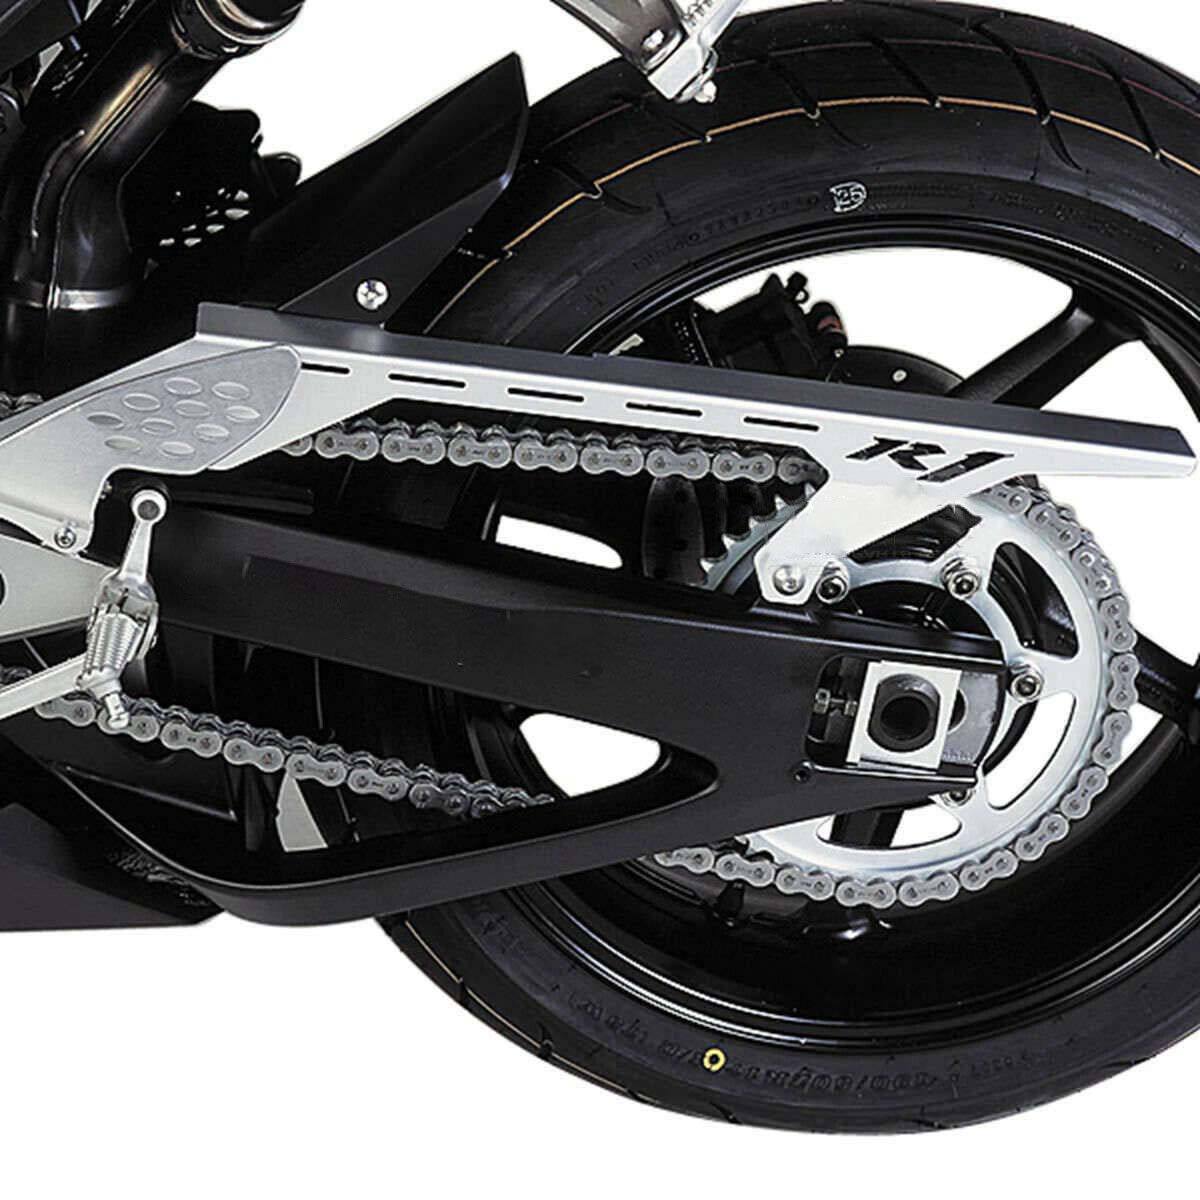 420 128 Links Chain Dirt Bike Honda CRF50 CRF70 CRF80 CRF110 CR80 Z50 XR50 - TDRMOTO